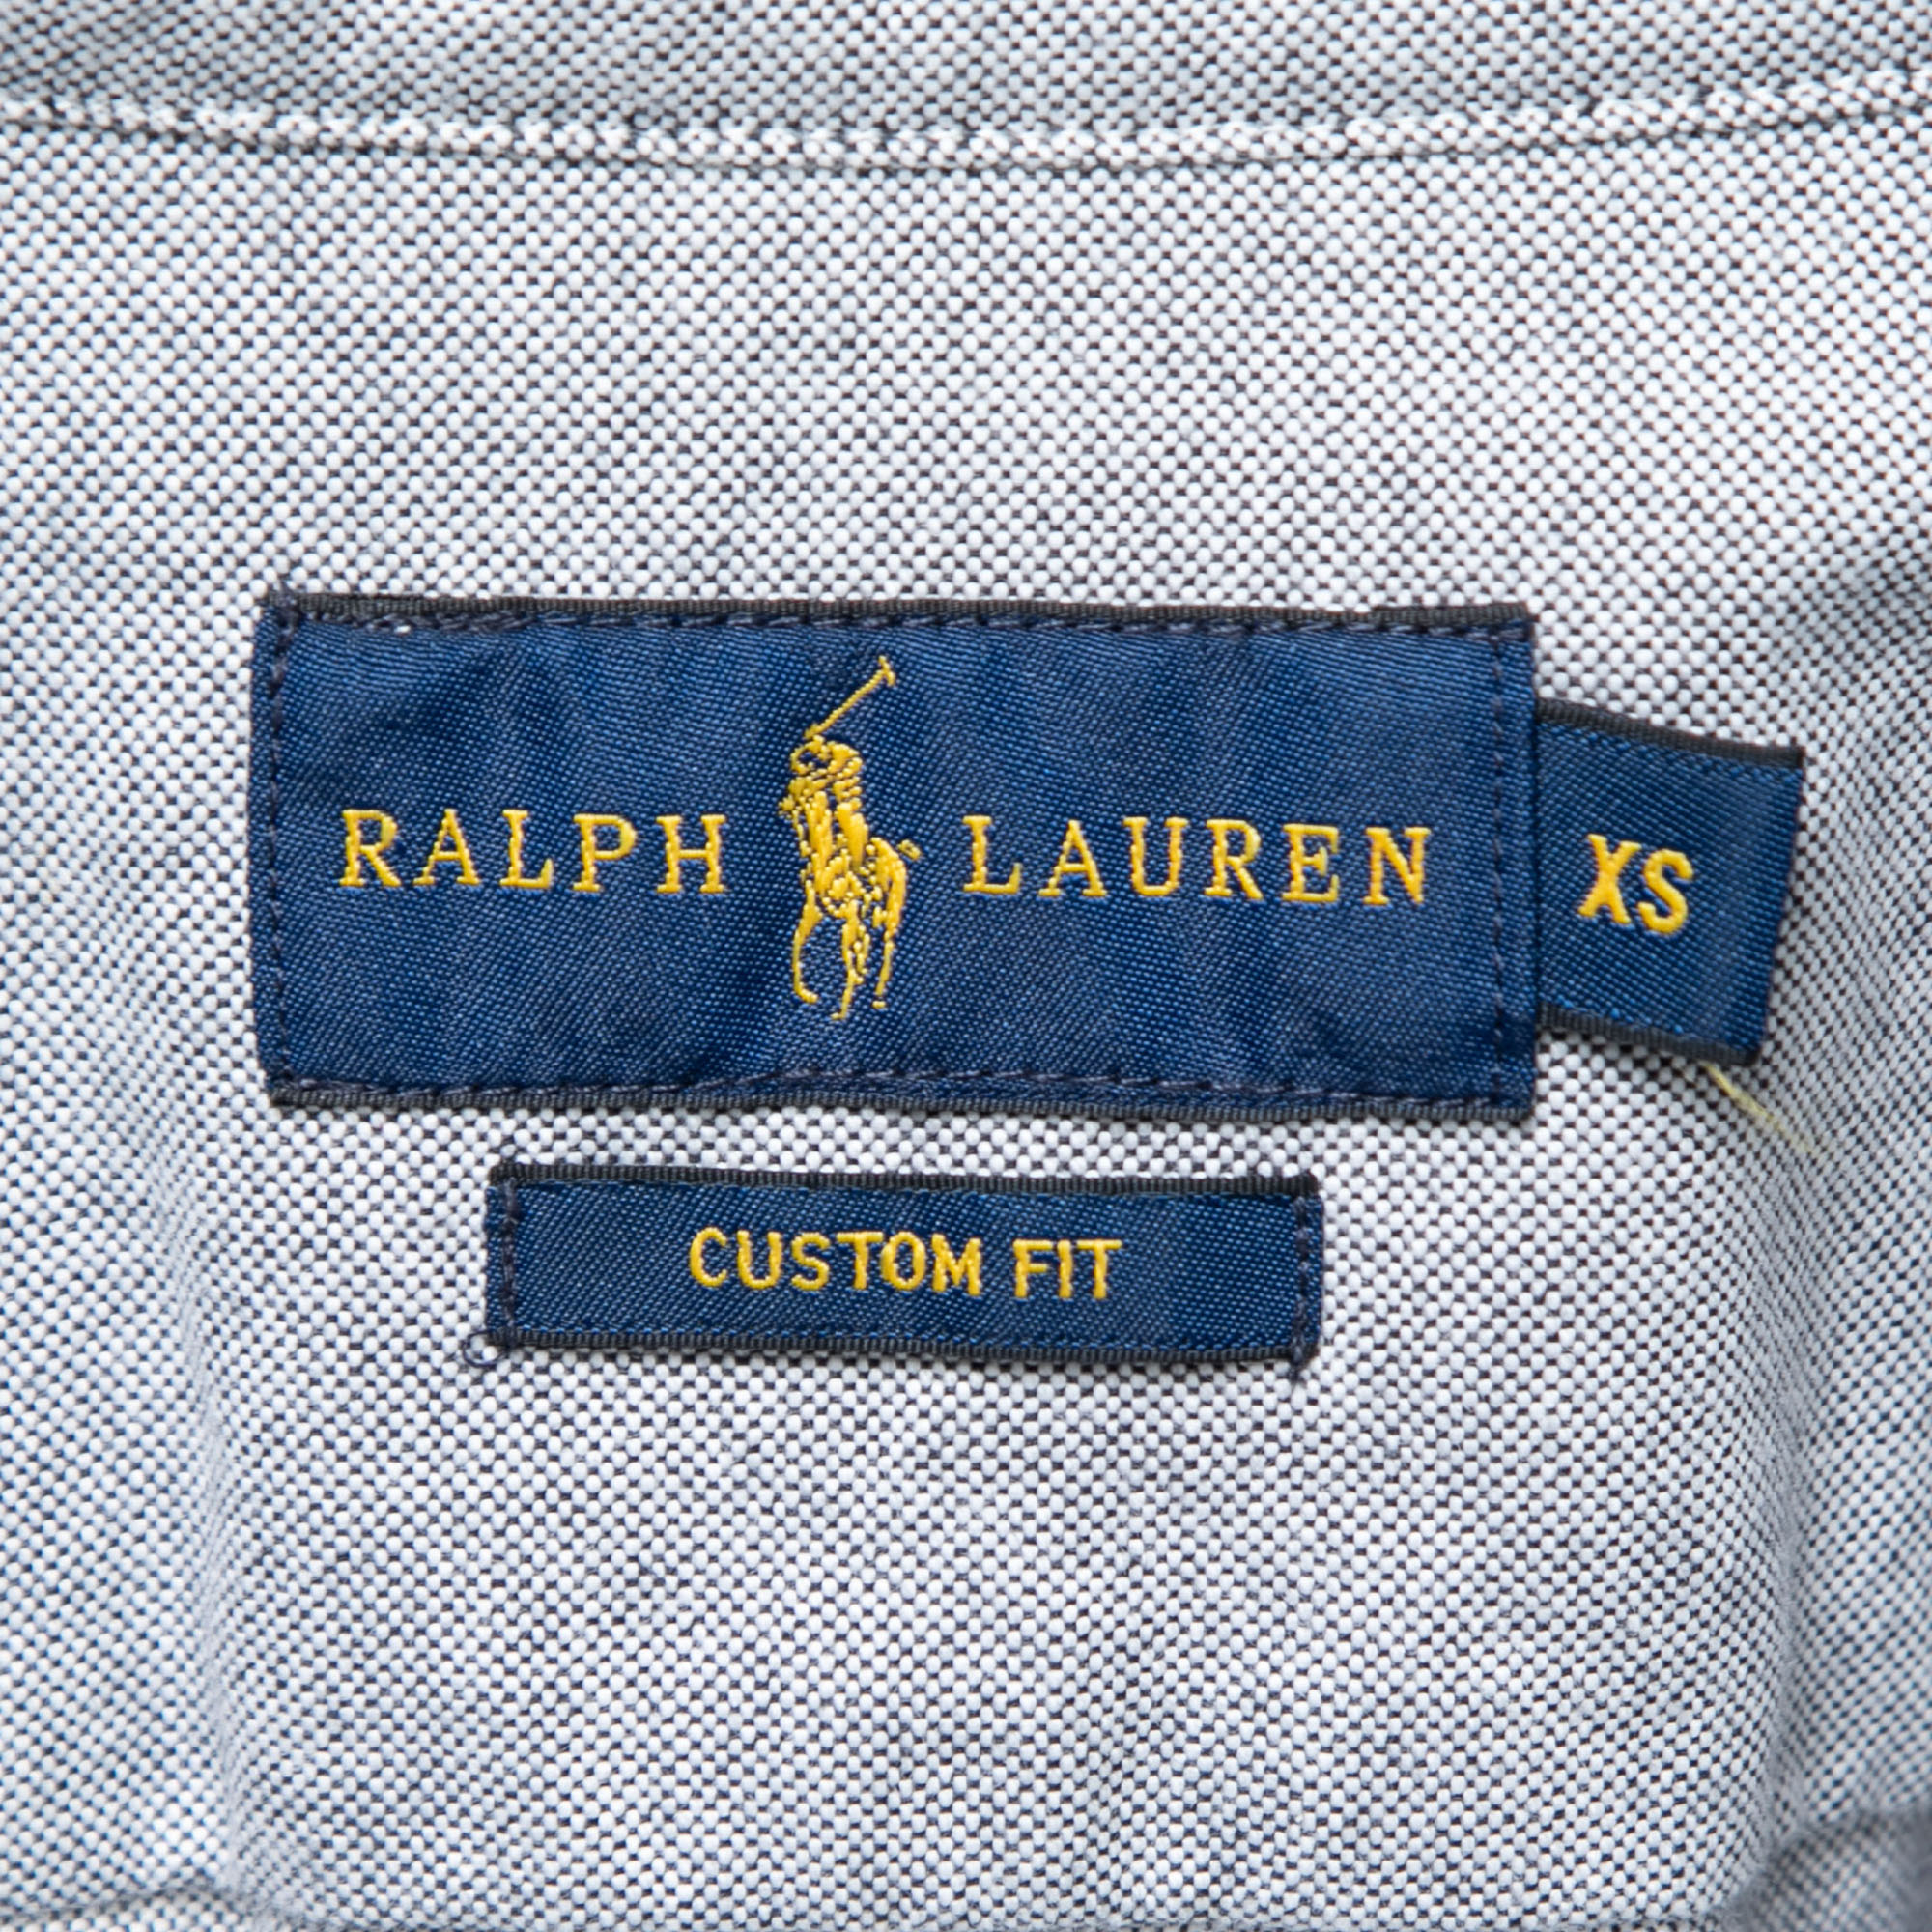 Ralph Lauren Grey Cotton Knit Oxford Button Down Shirt XS